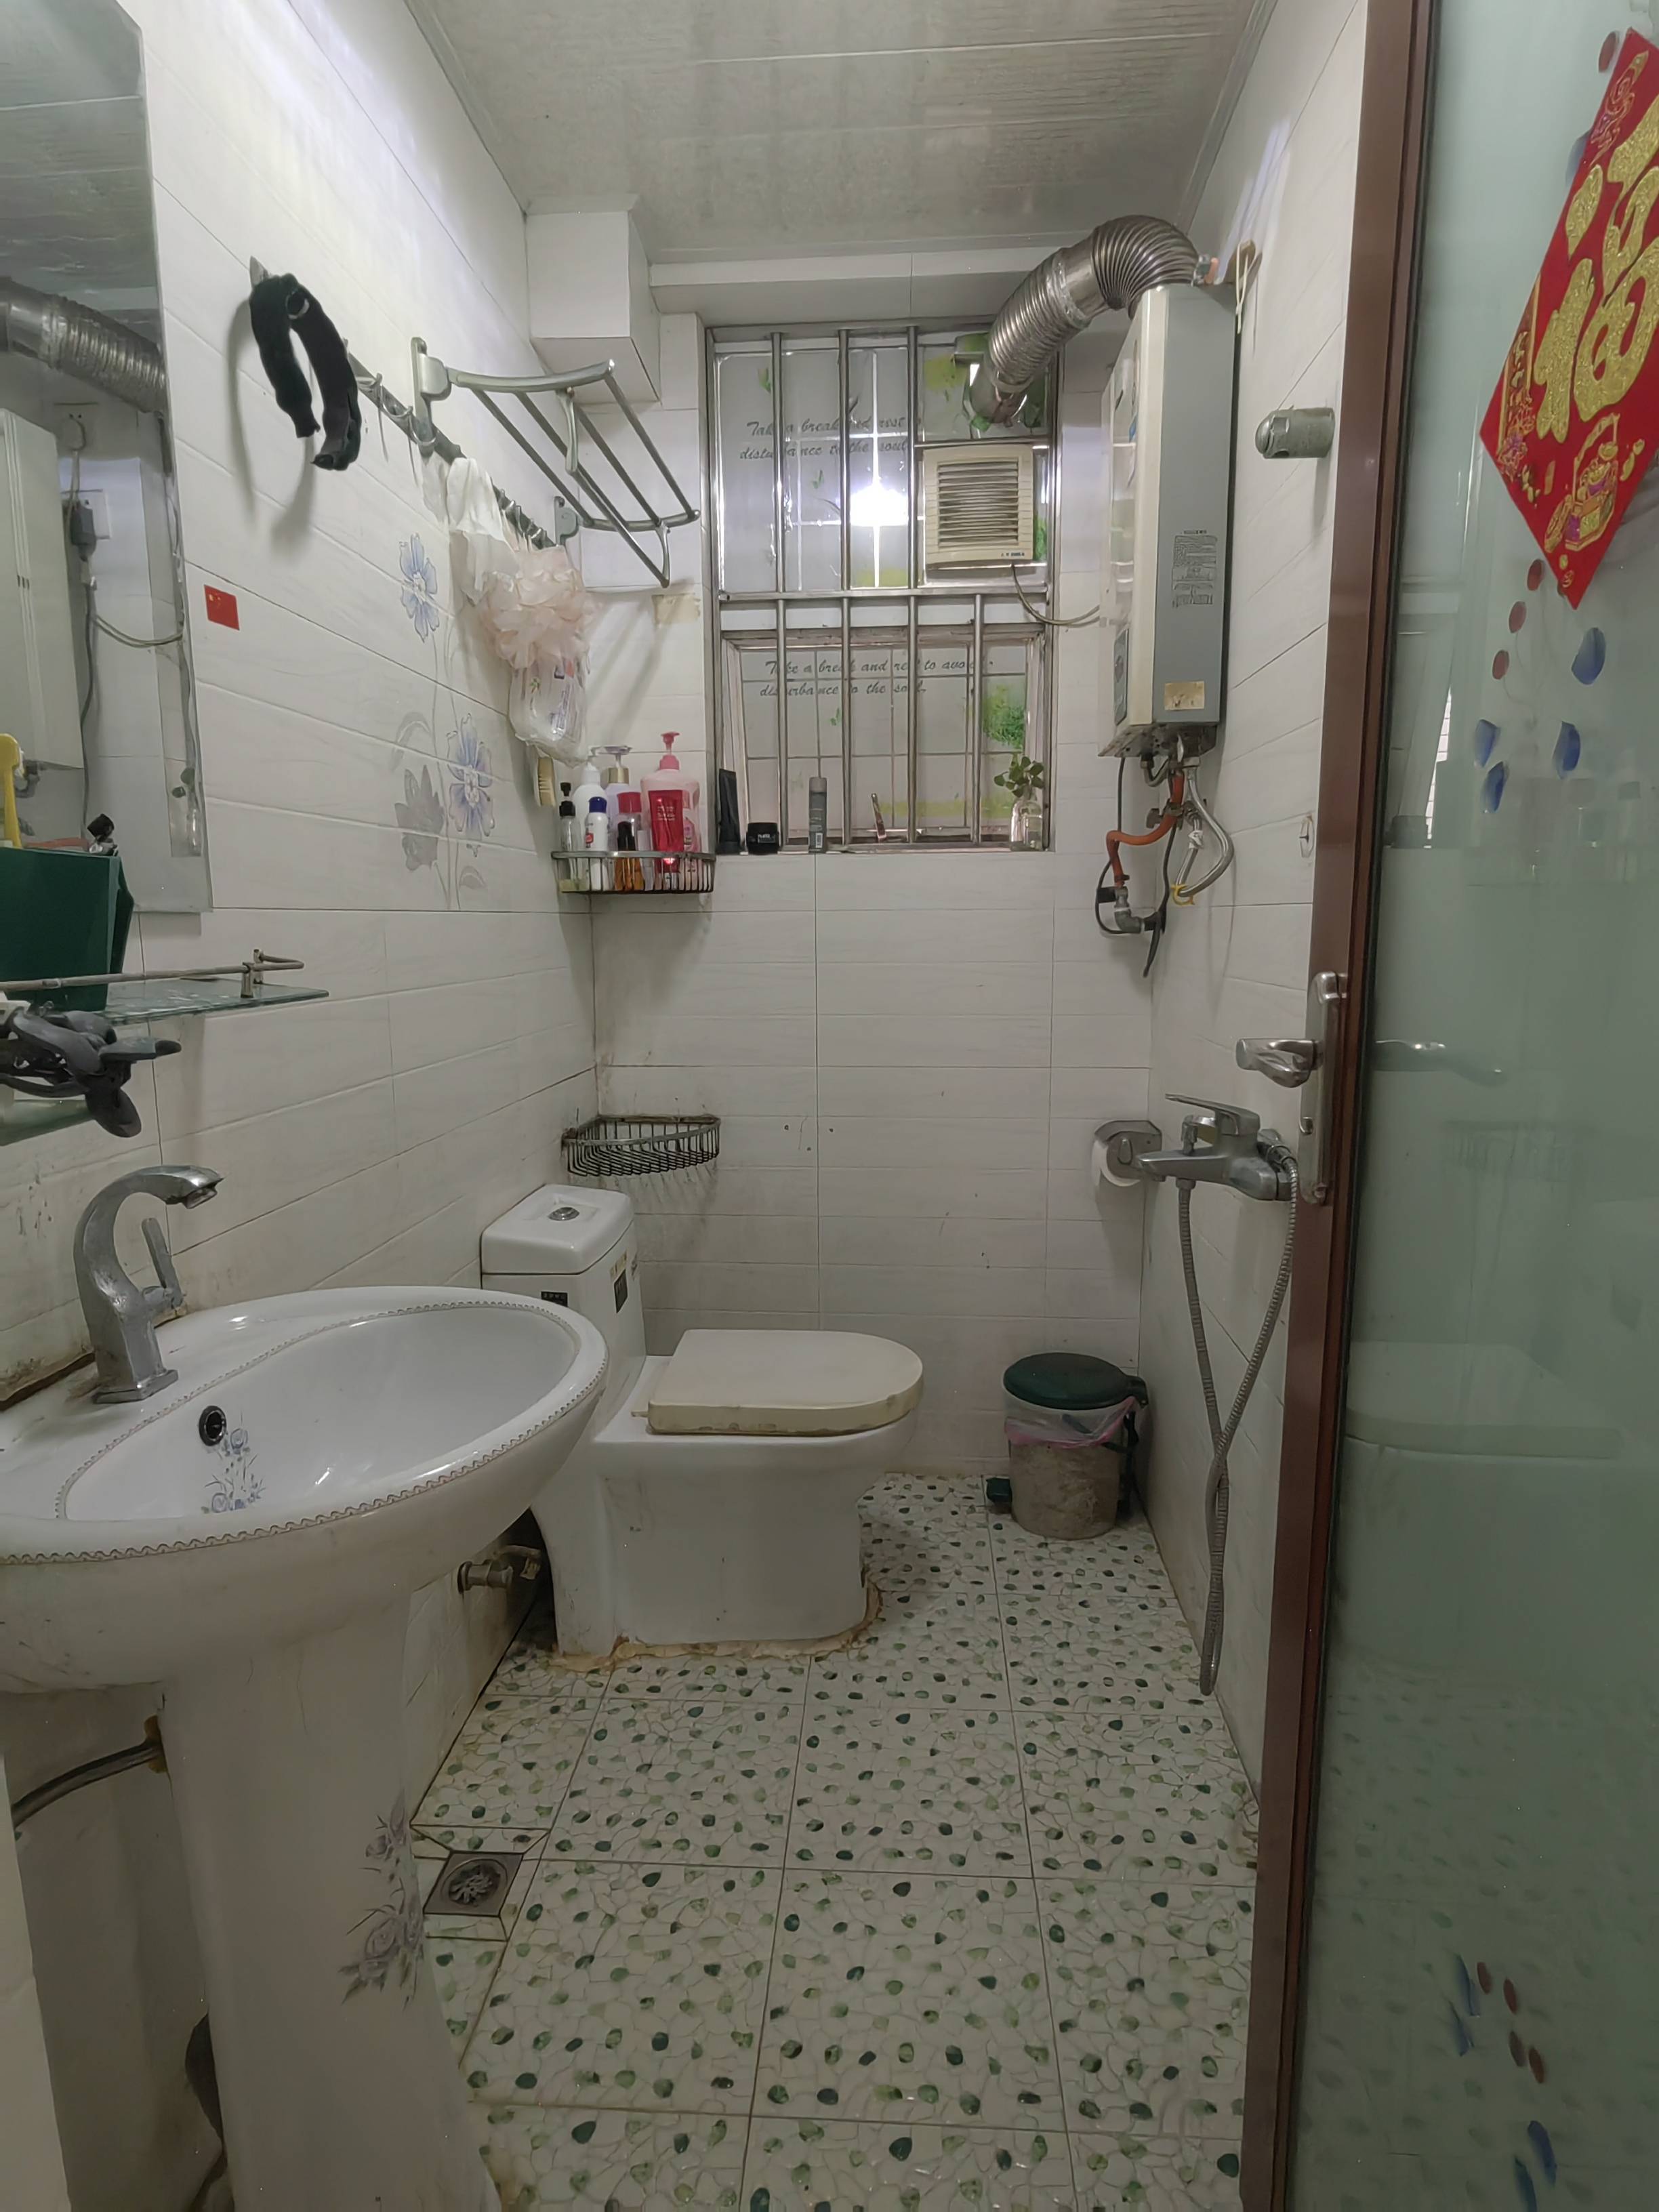 Shenzhen-Longgang-Cozy Home,Clean&Comfy